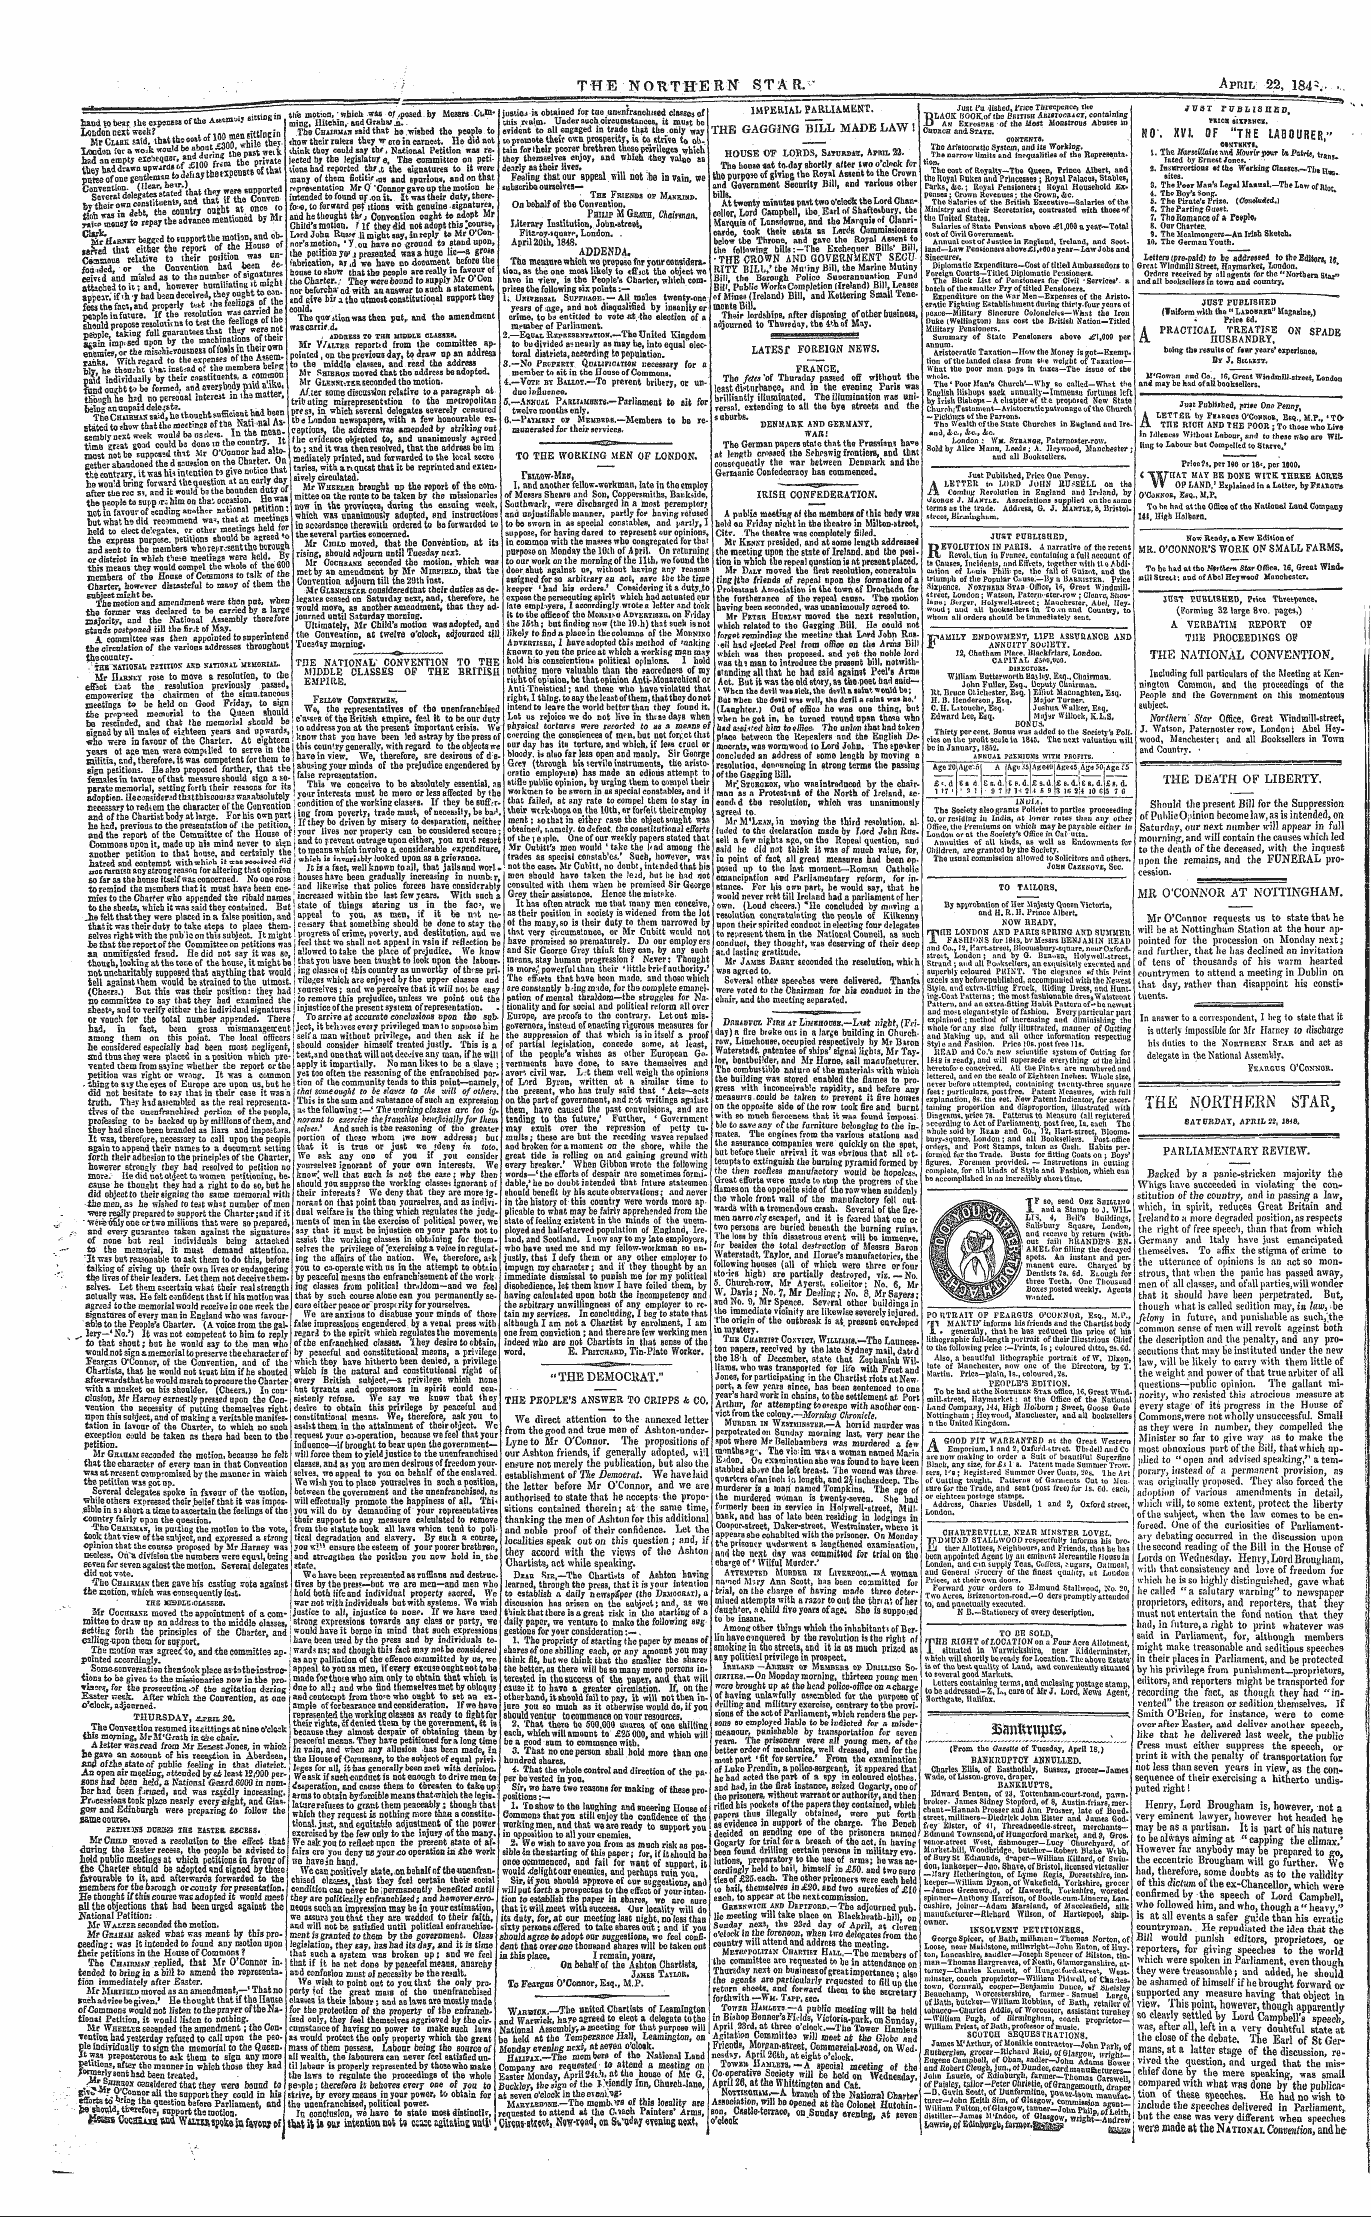 Northern Star (1837-1852): jS F Y, 4th edition - Just Fr/Blished , Price 8ix7ehci. Jtjst Pirni.